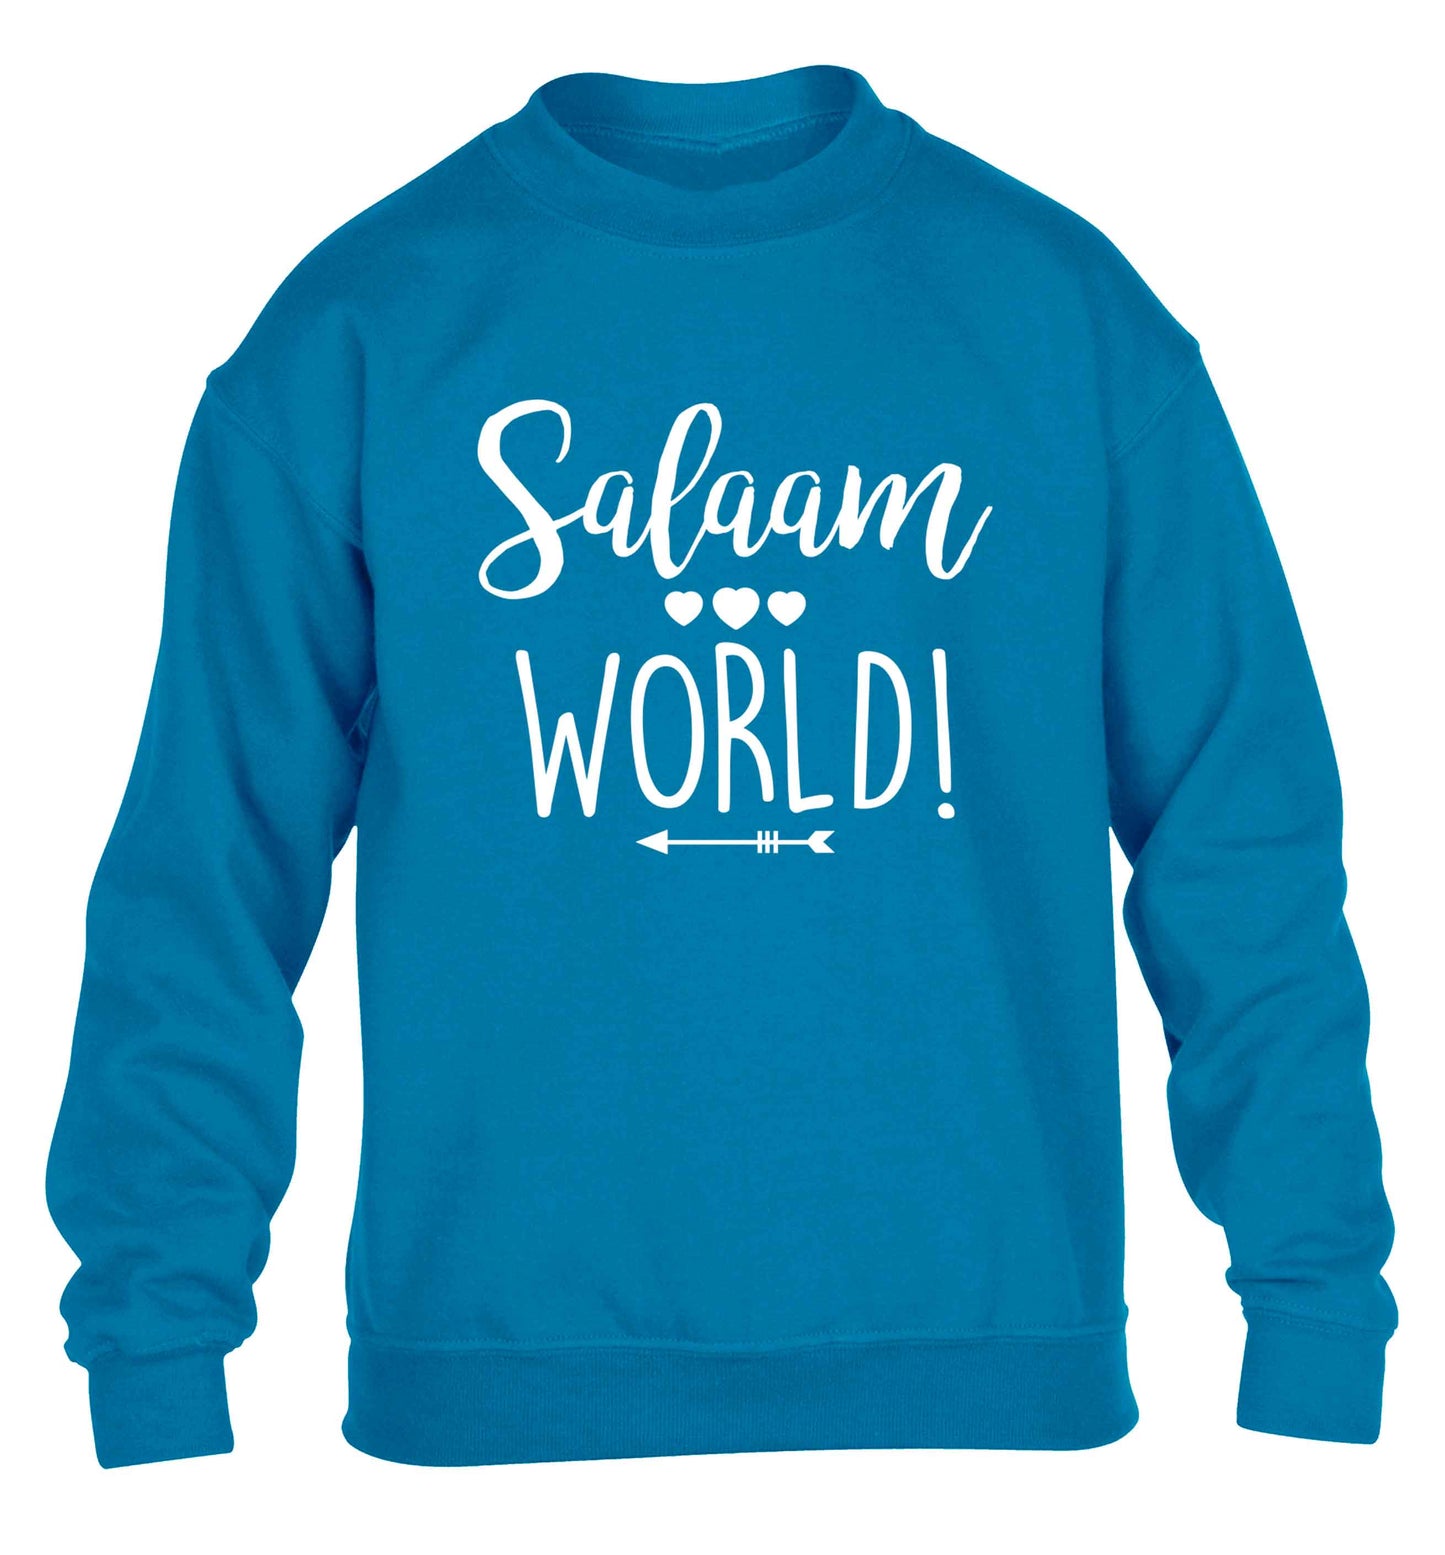 Salaam world children's blue sweater 12-13 Years